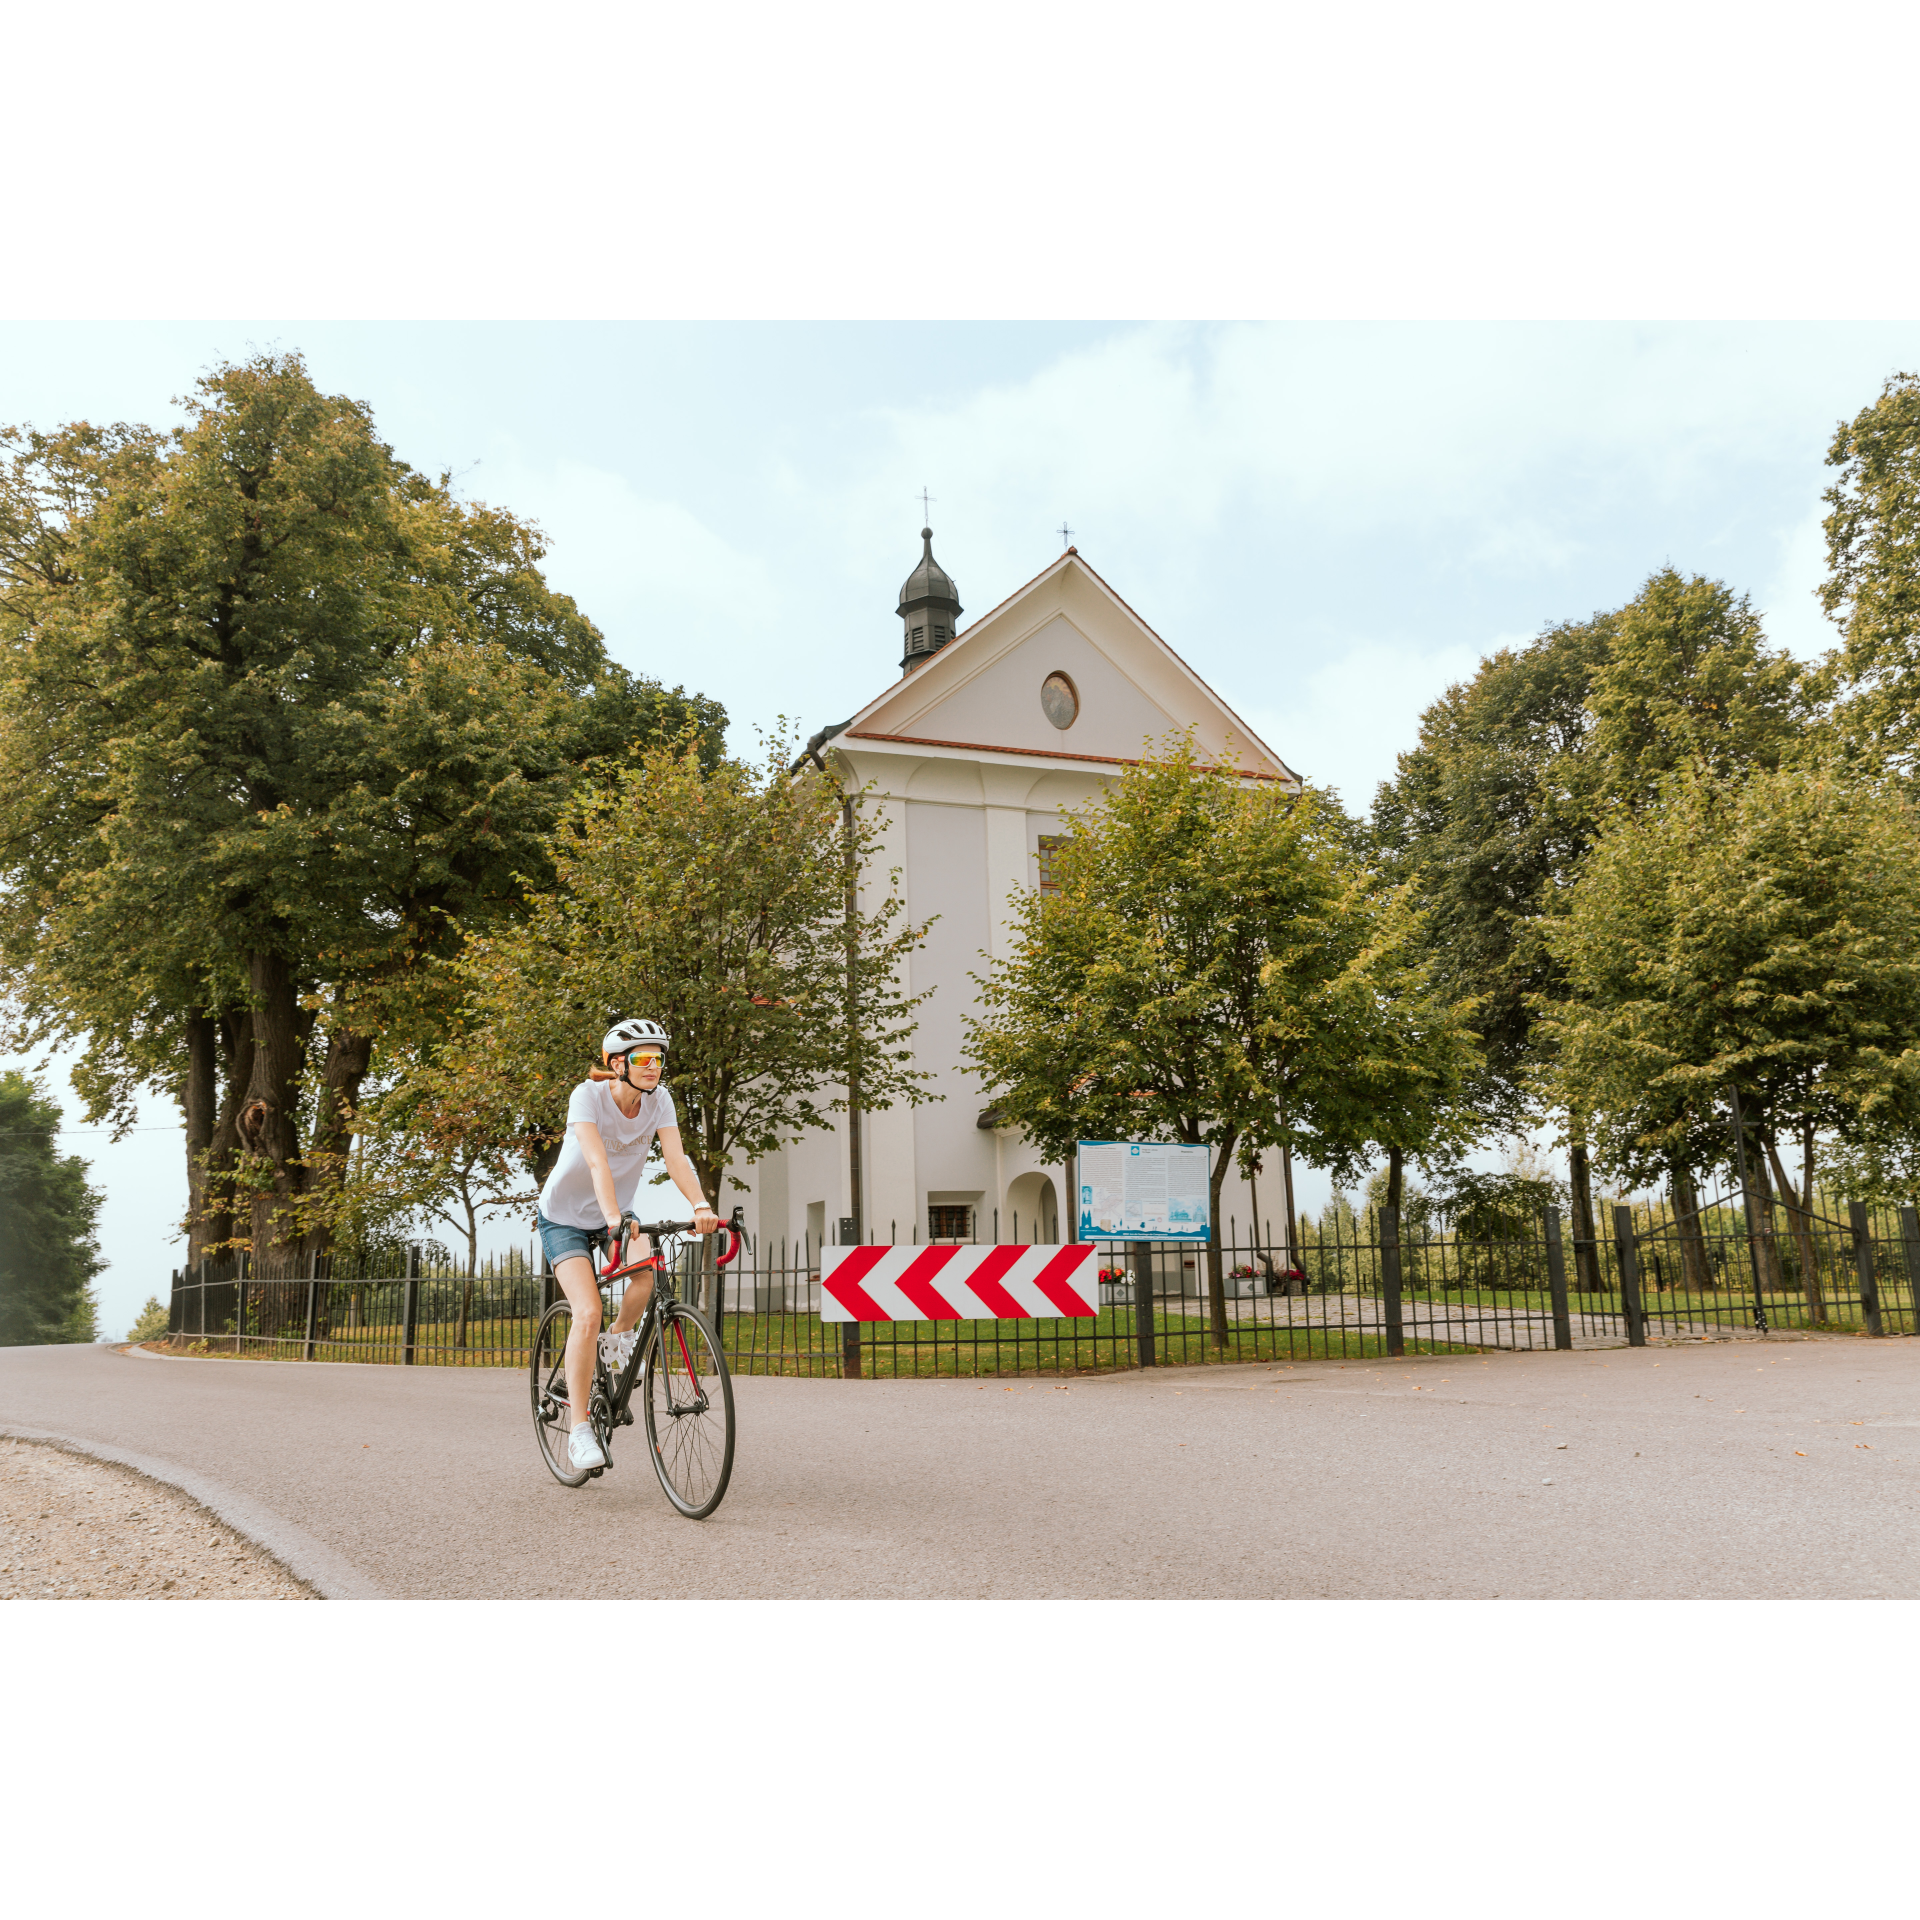 Cyclist and church